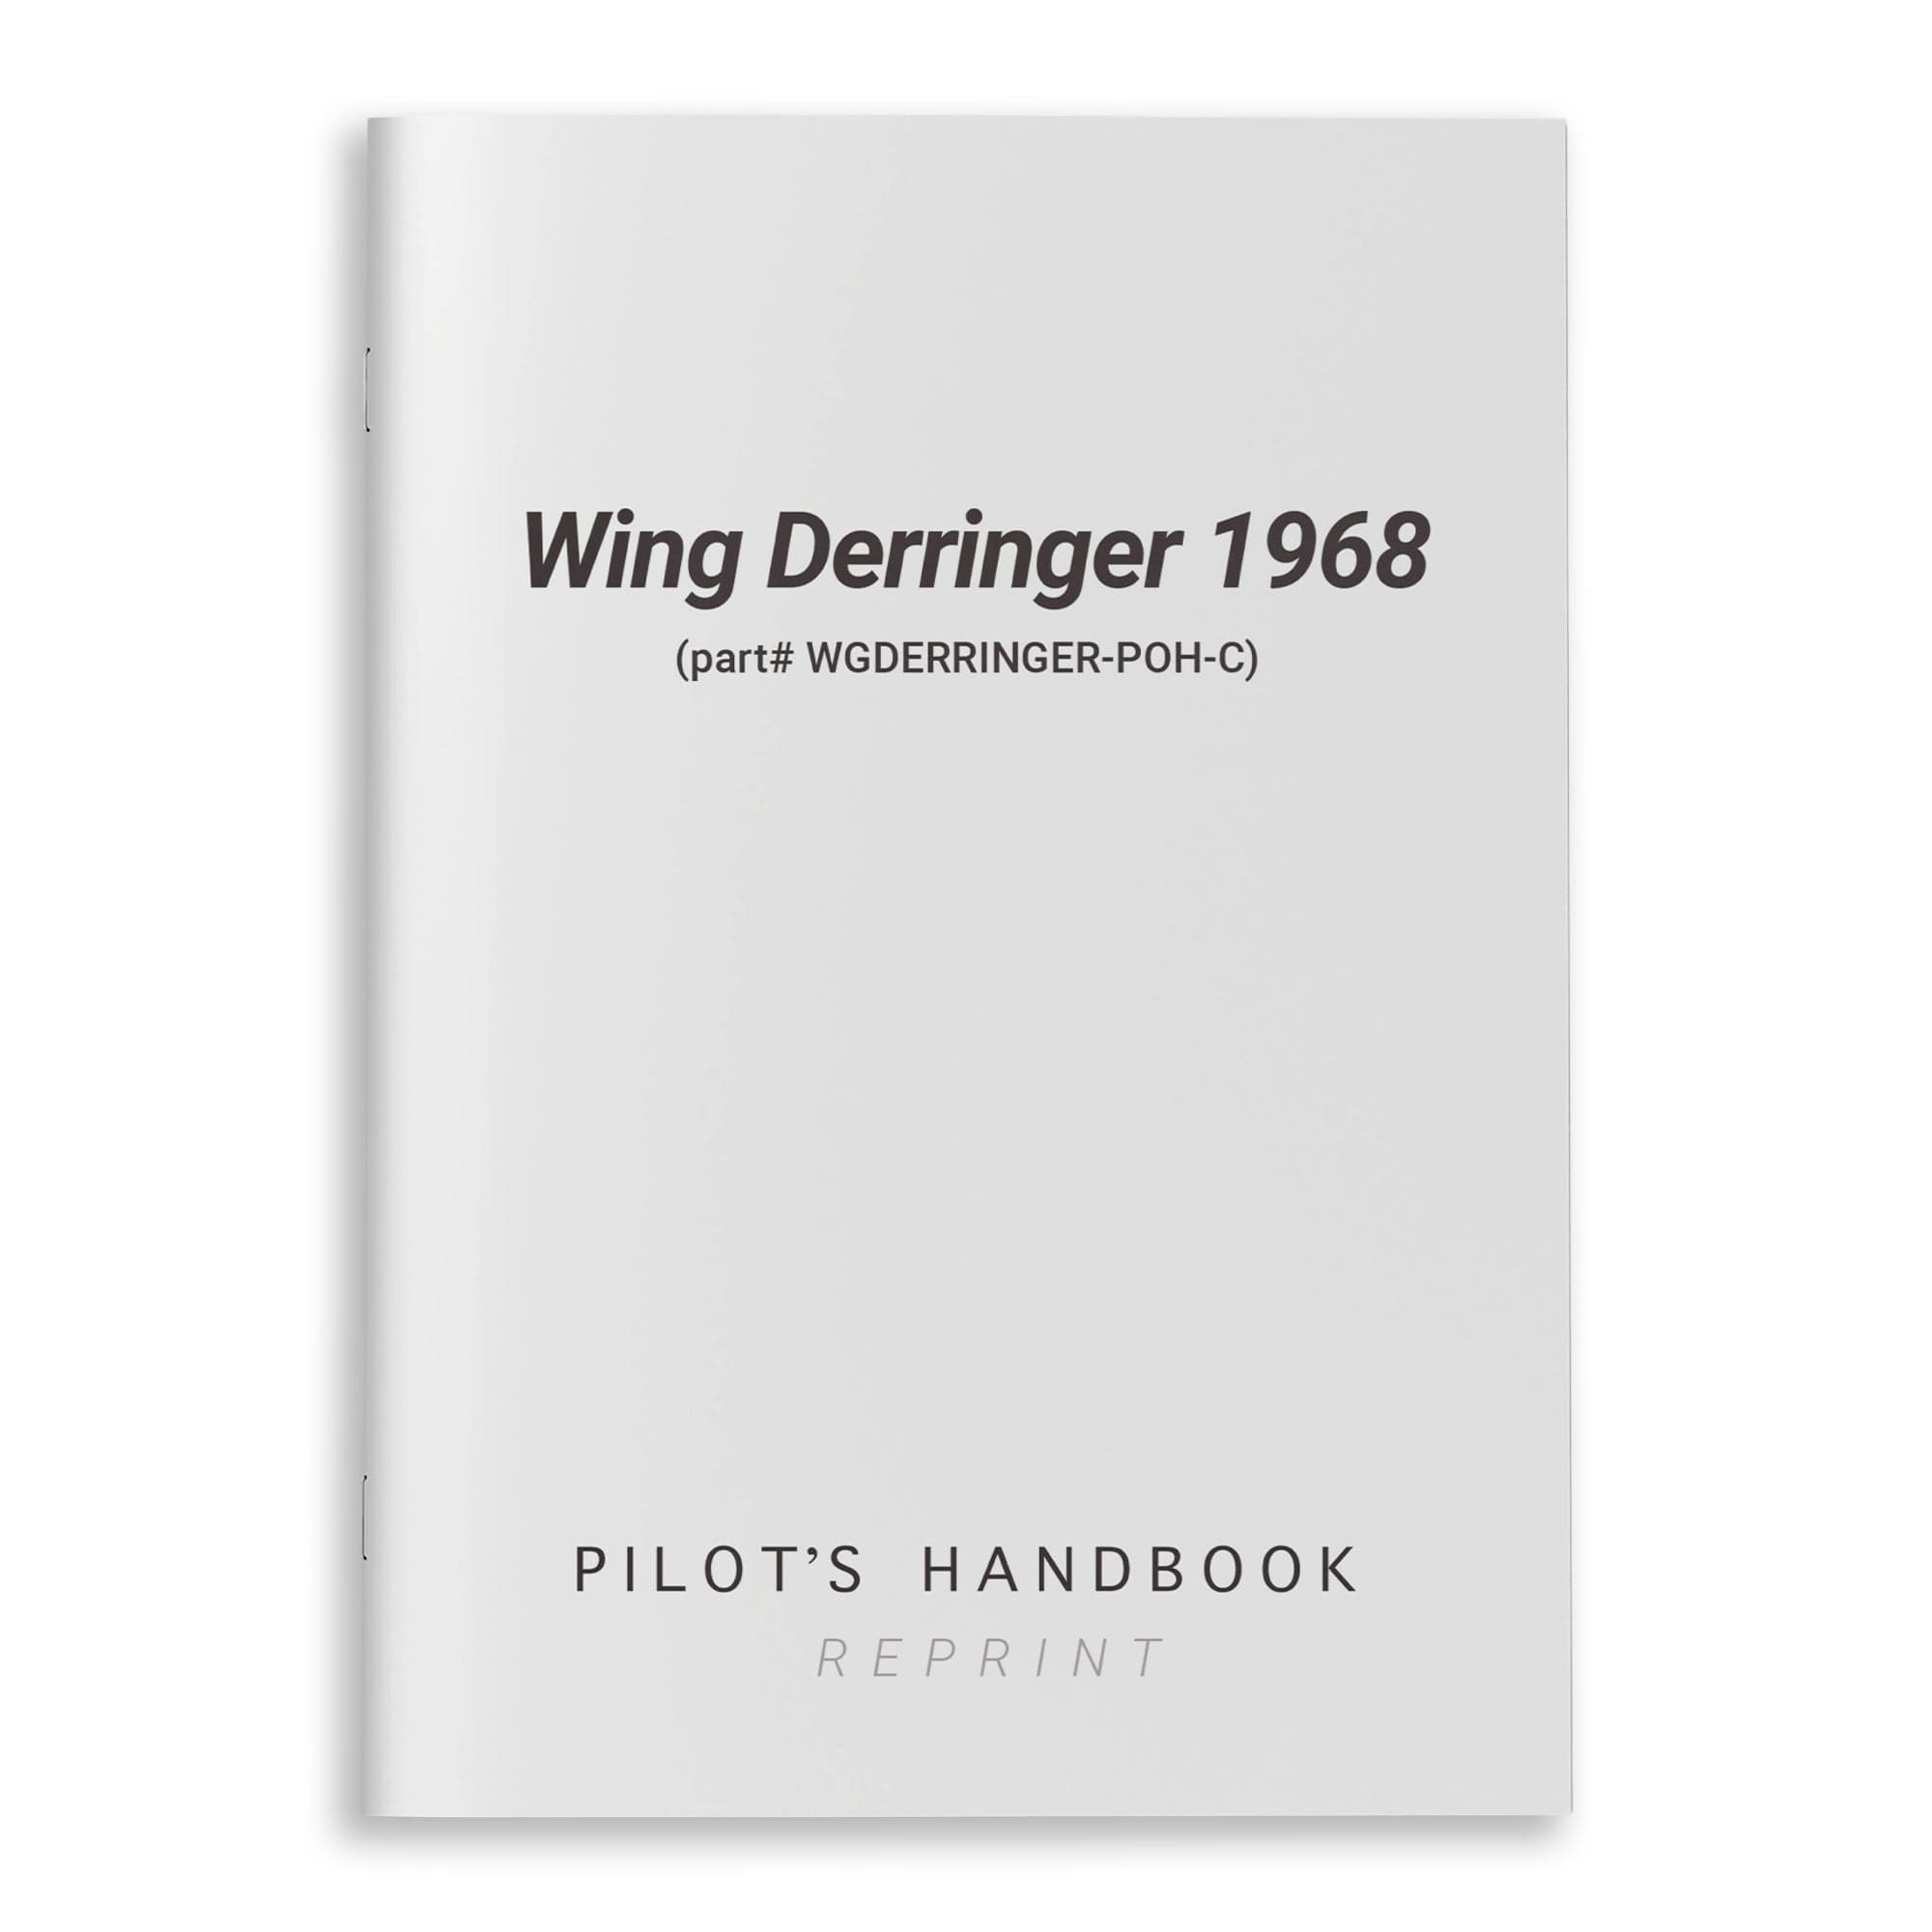 Wing Derringer 1968 Pilot's Handbook (part# WGDERRINGER-POH-C) - PilotMall.com